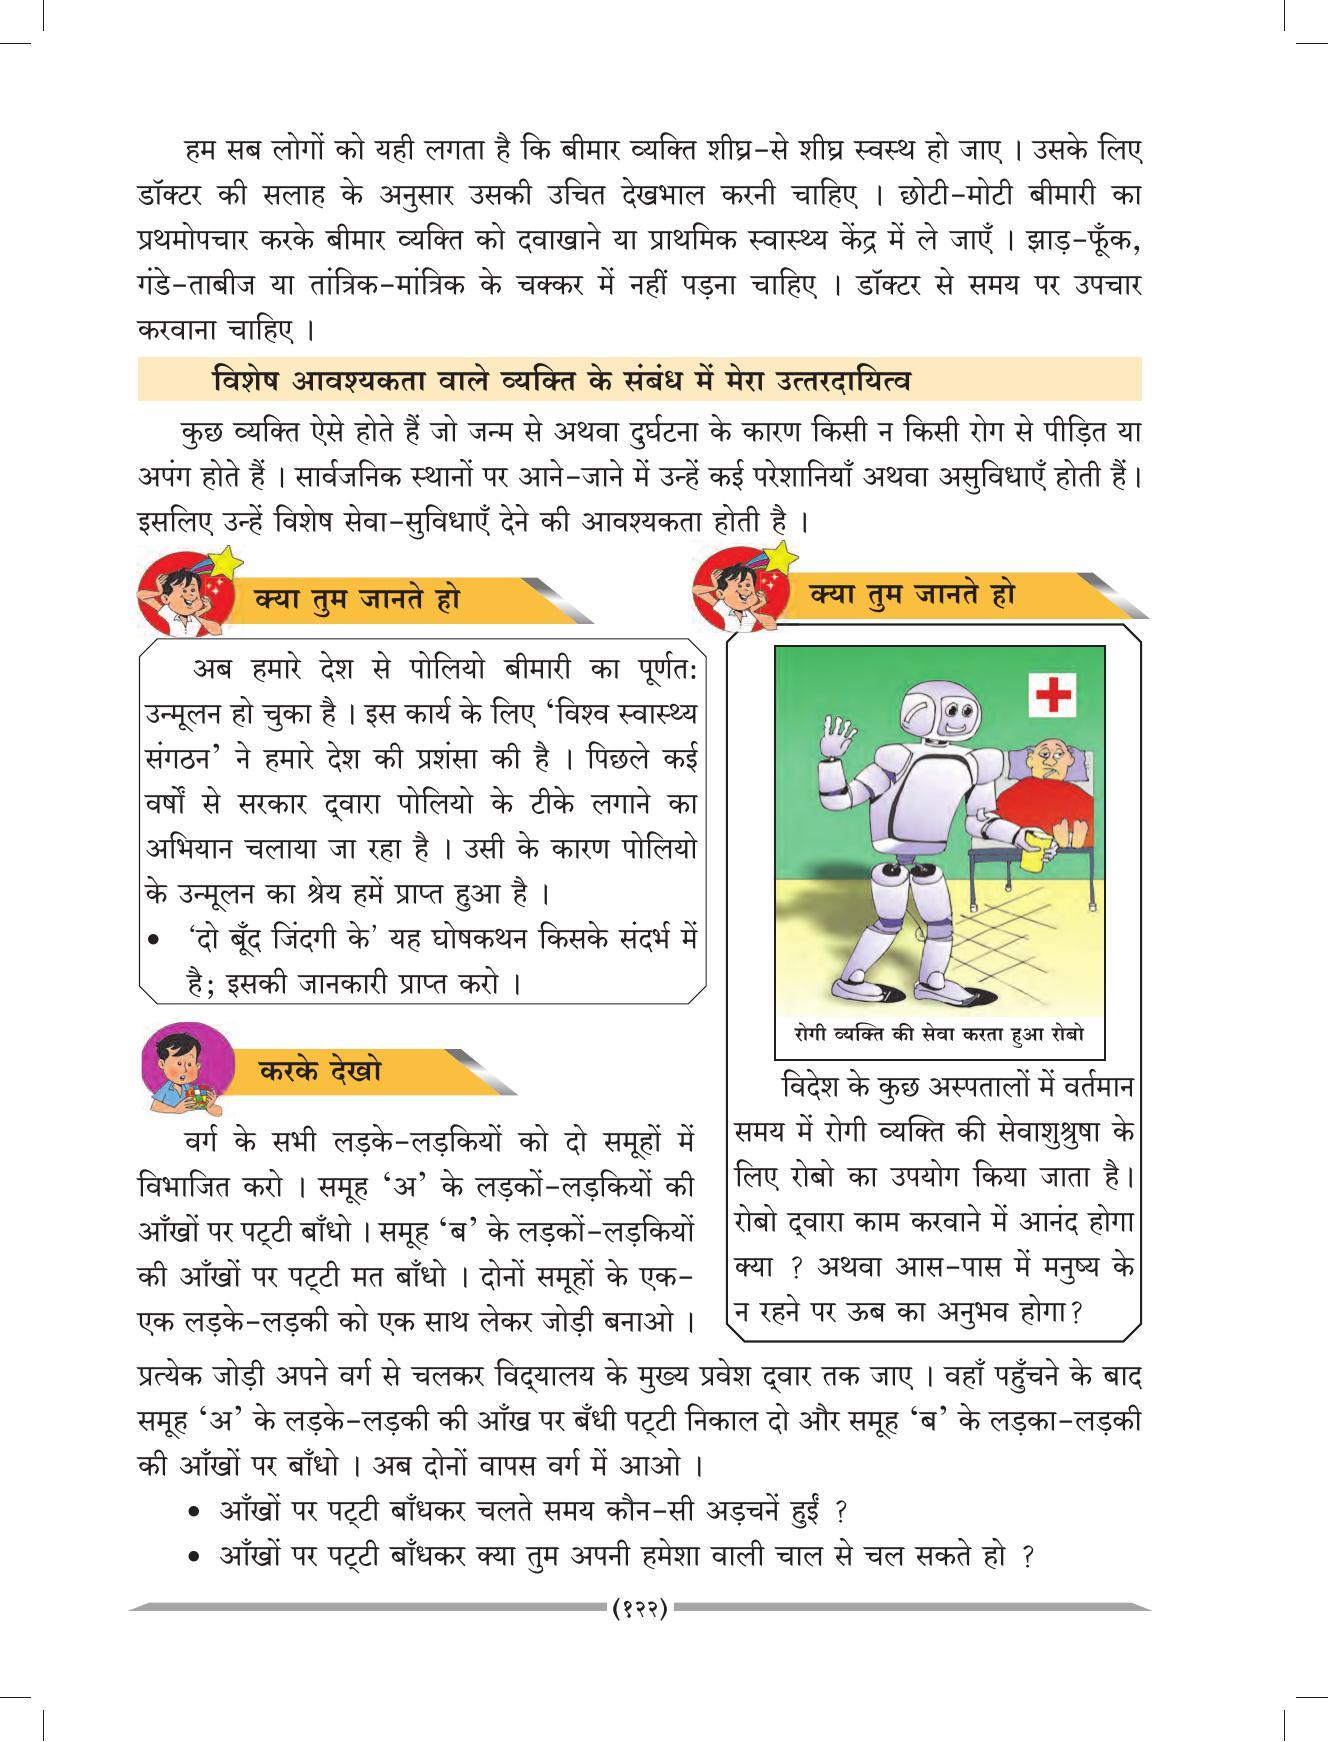 Maharashtra Board Class 4 EVS 1 (Hindi Medium) Textbook - Page 132